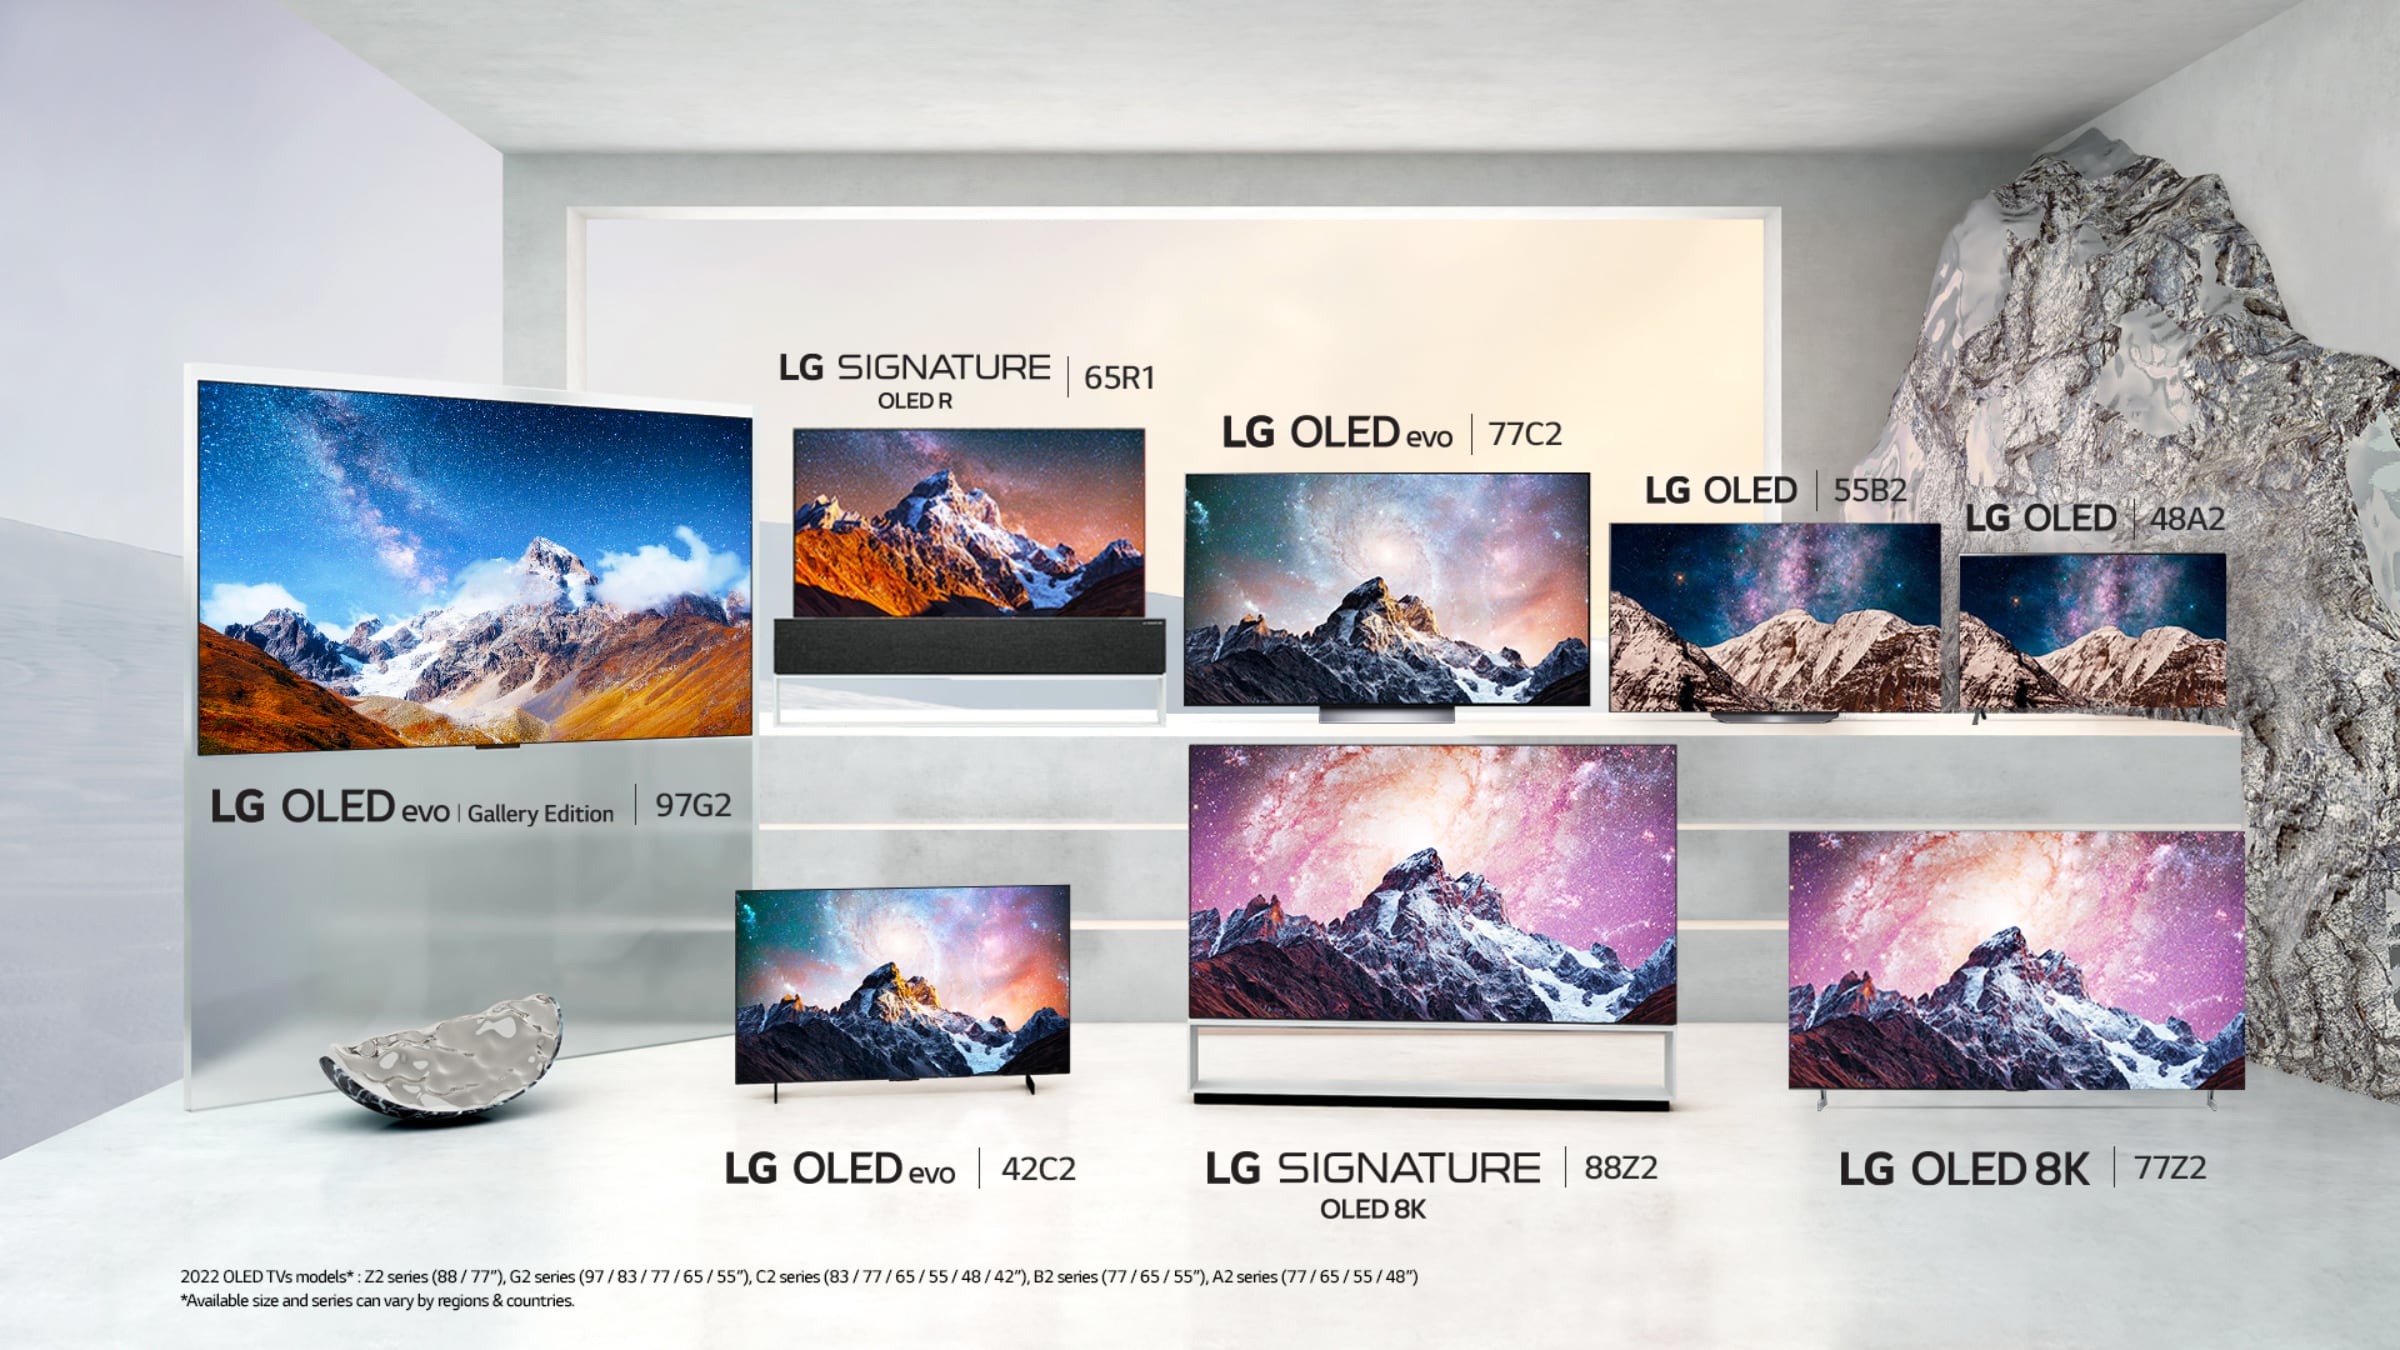 42 LG C2 will get OLED EX panels after the second quarter - FlatpanelsHD